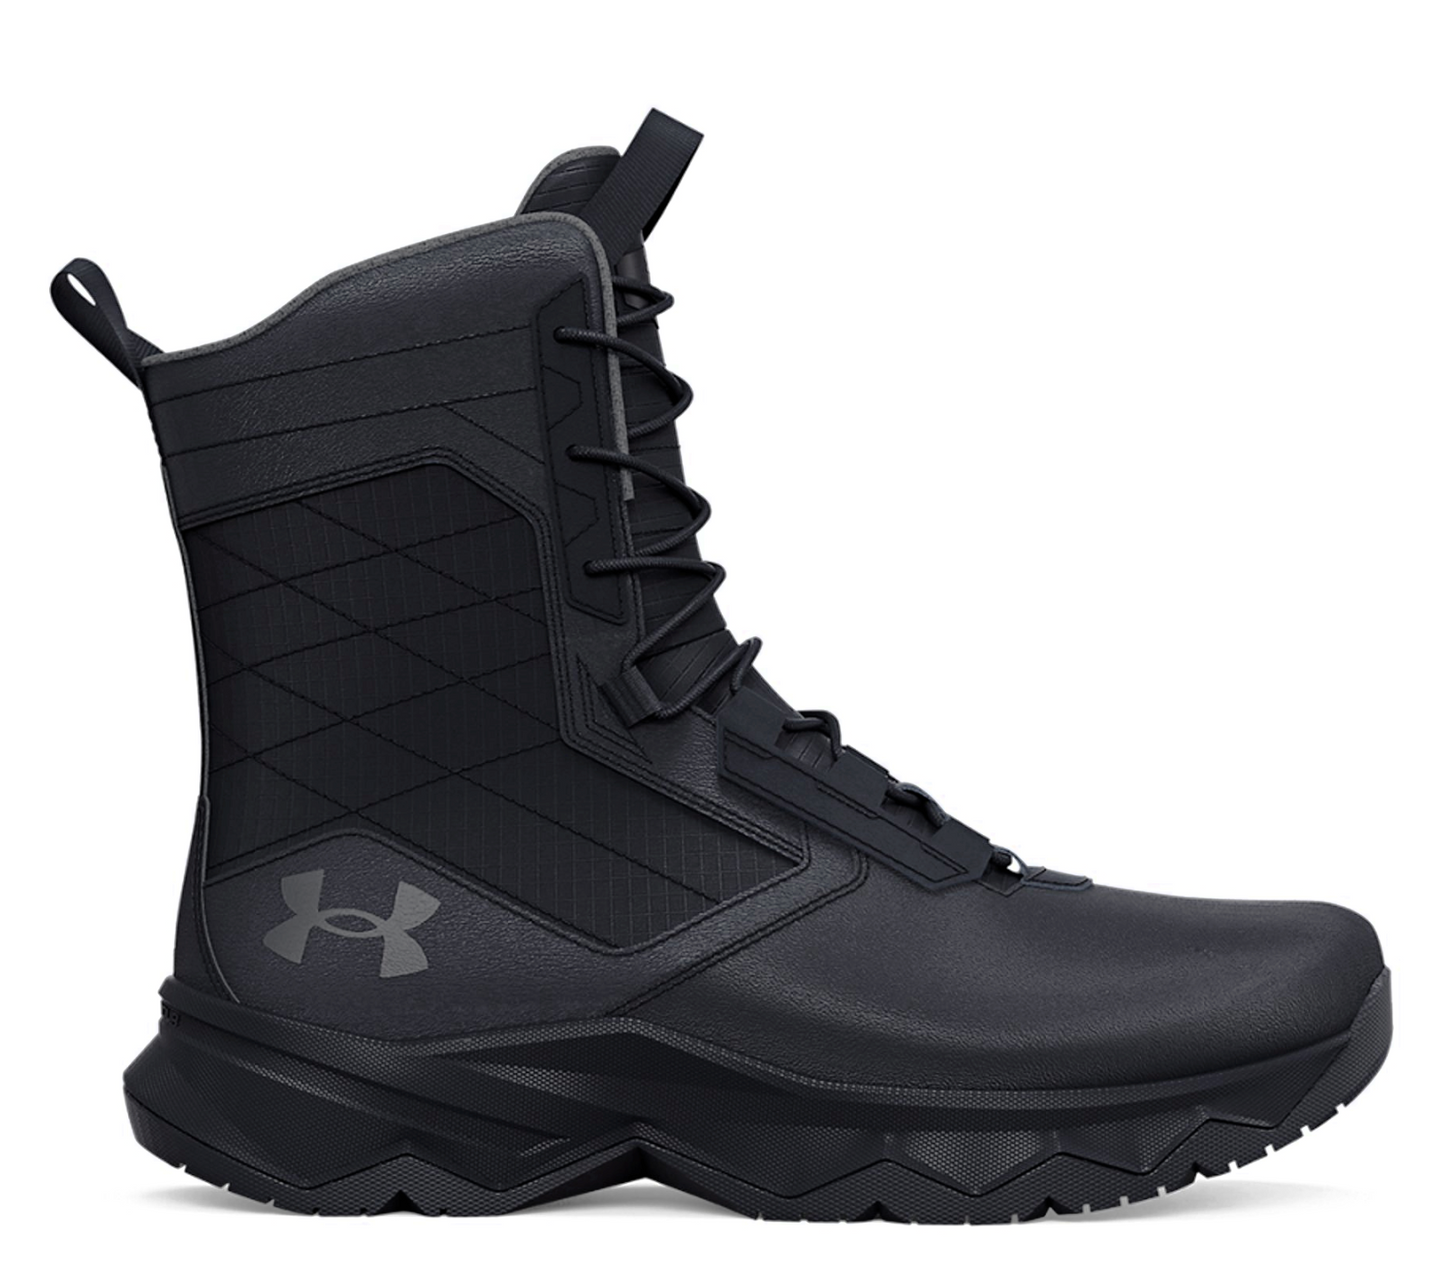 UA Stellar G2 8" Side-Zip Black Tactical Boots